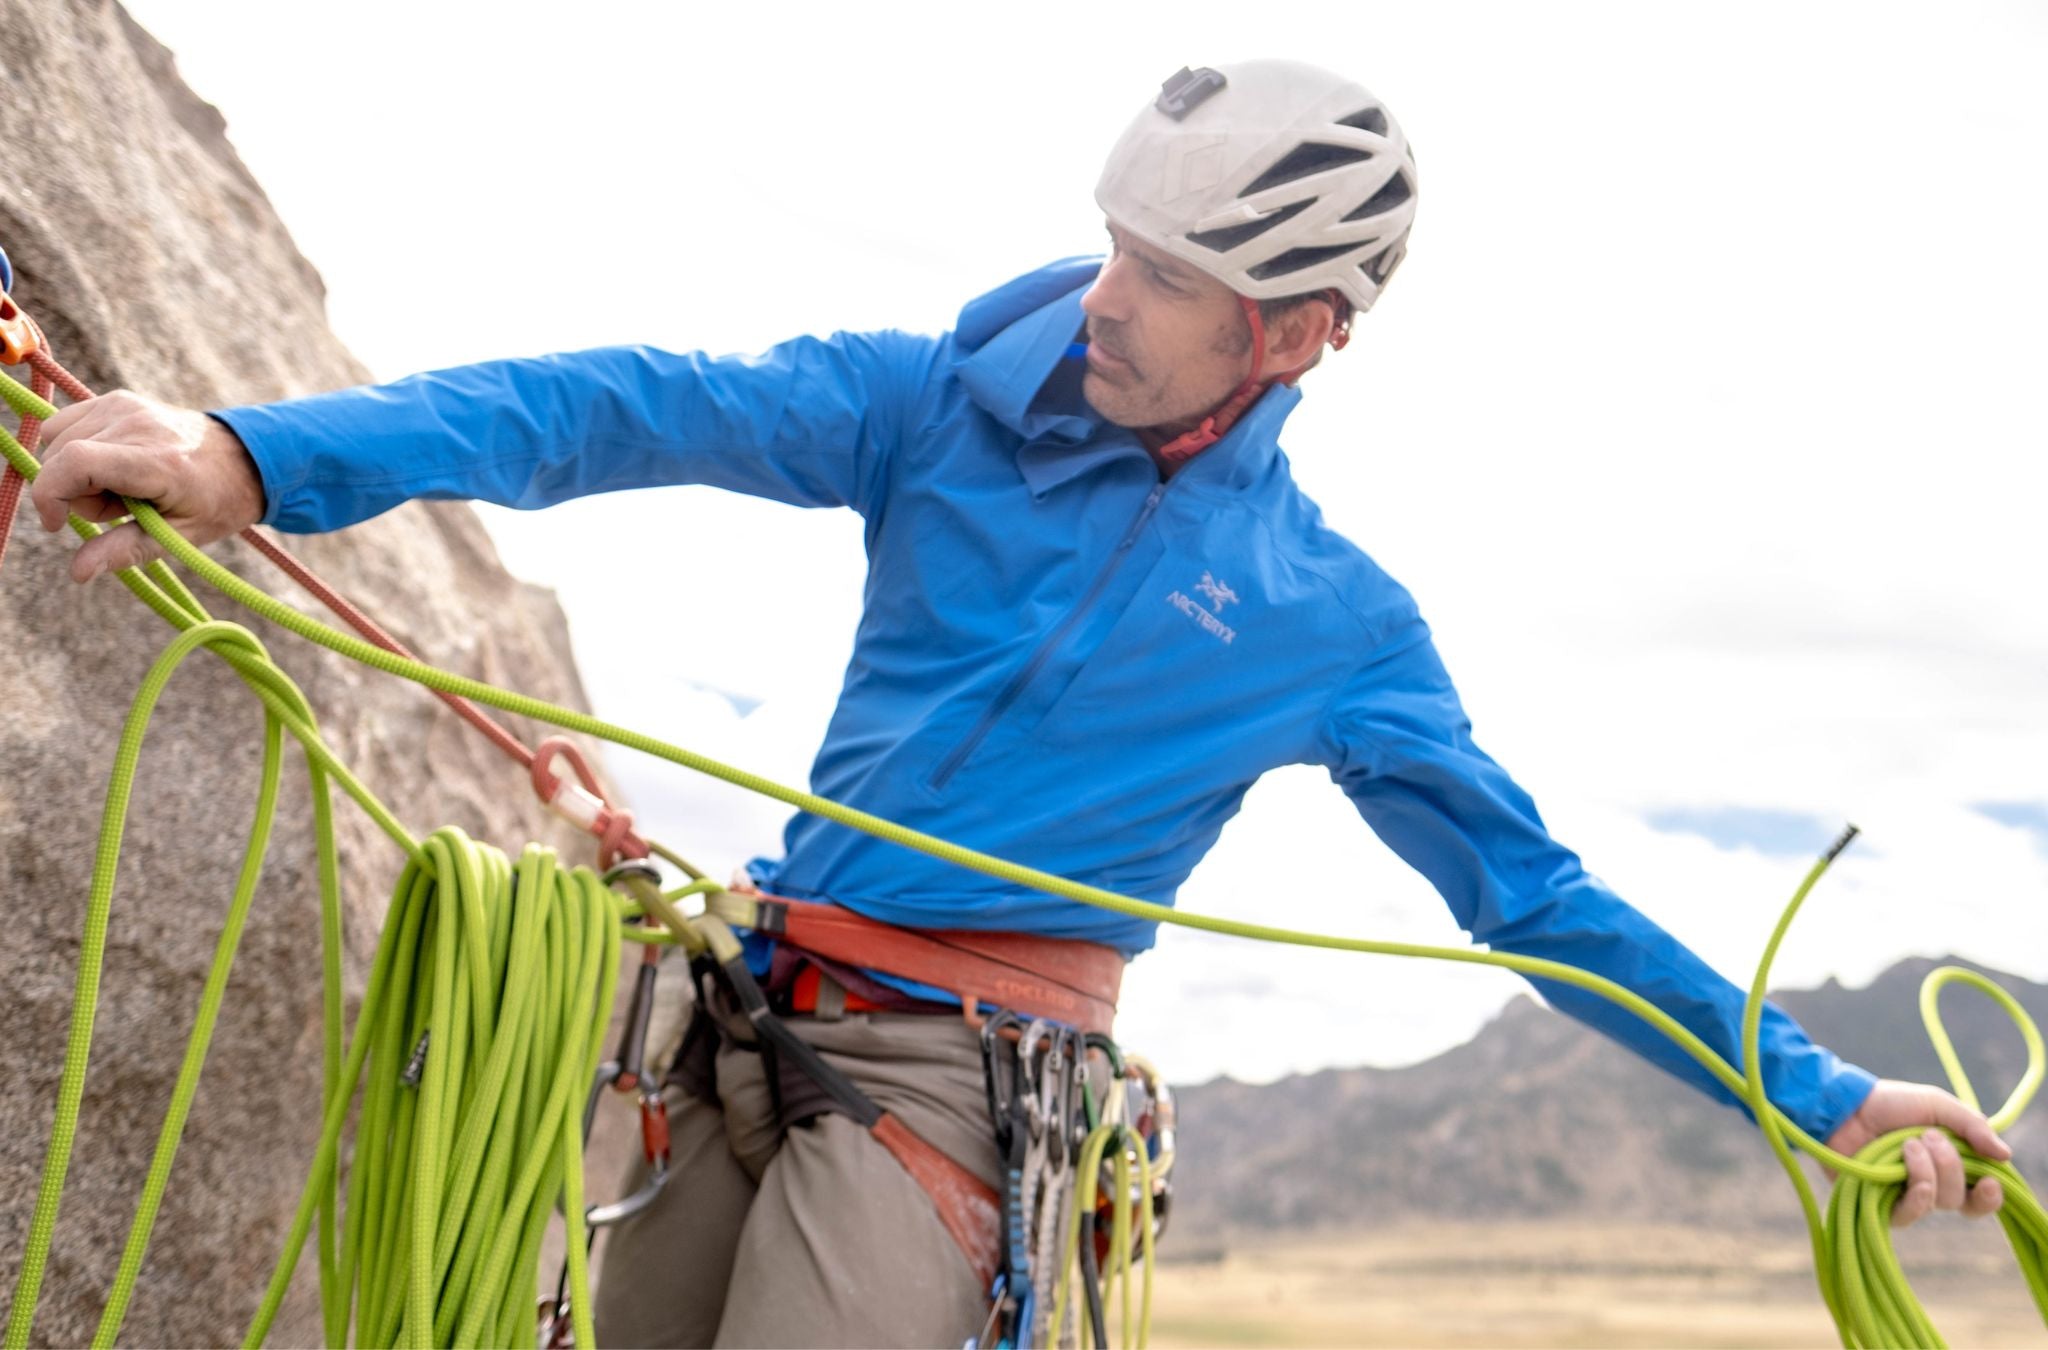 Matt Walker hoisting rope while climbing